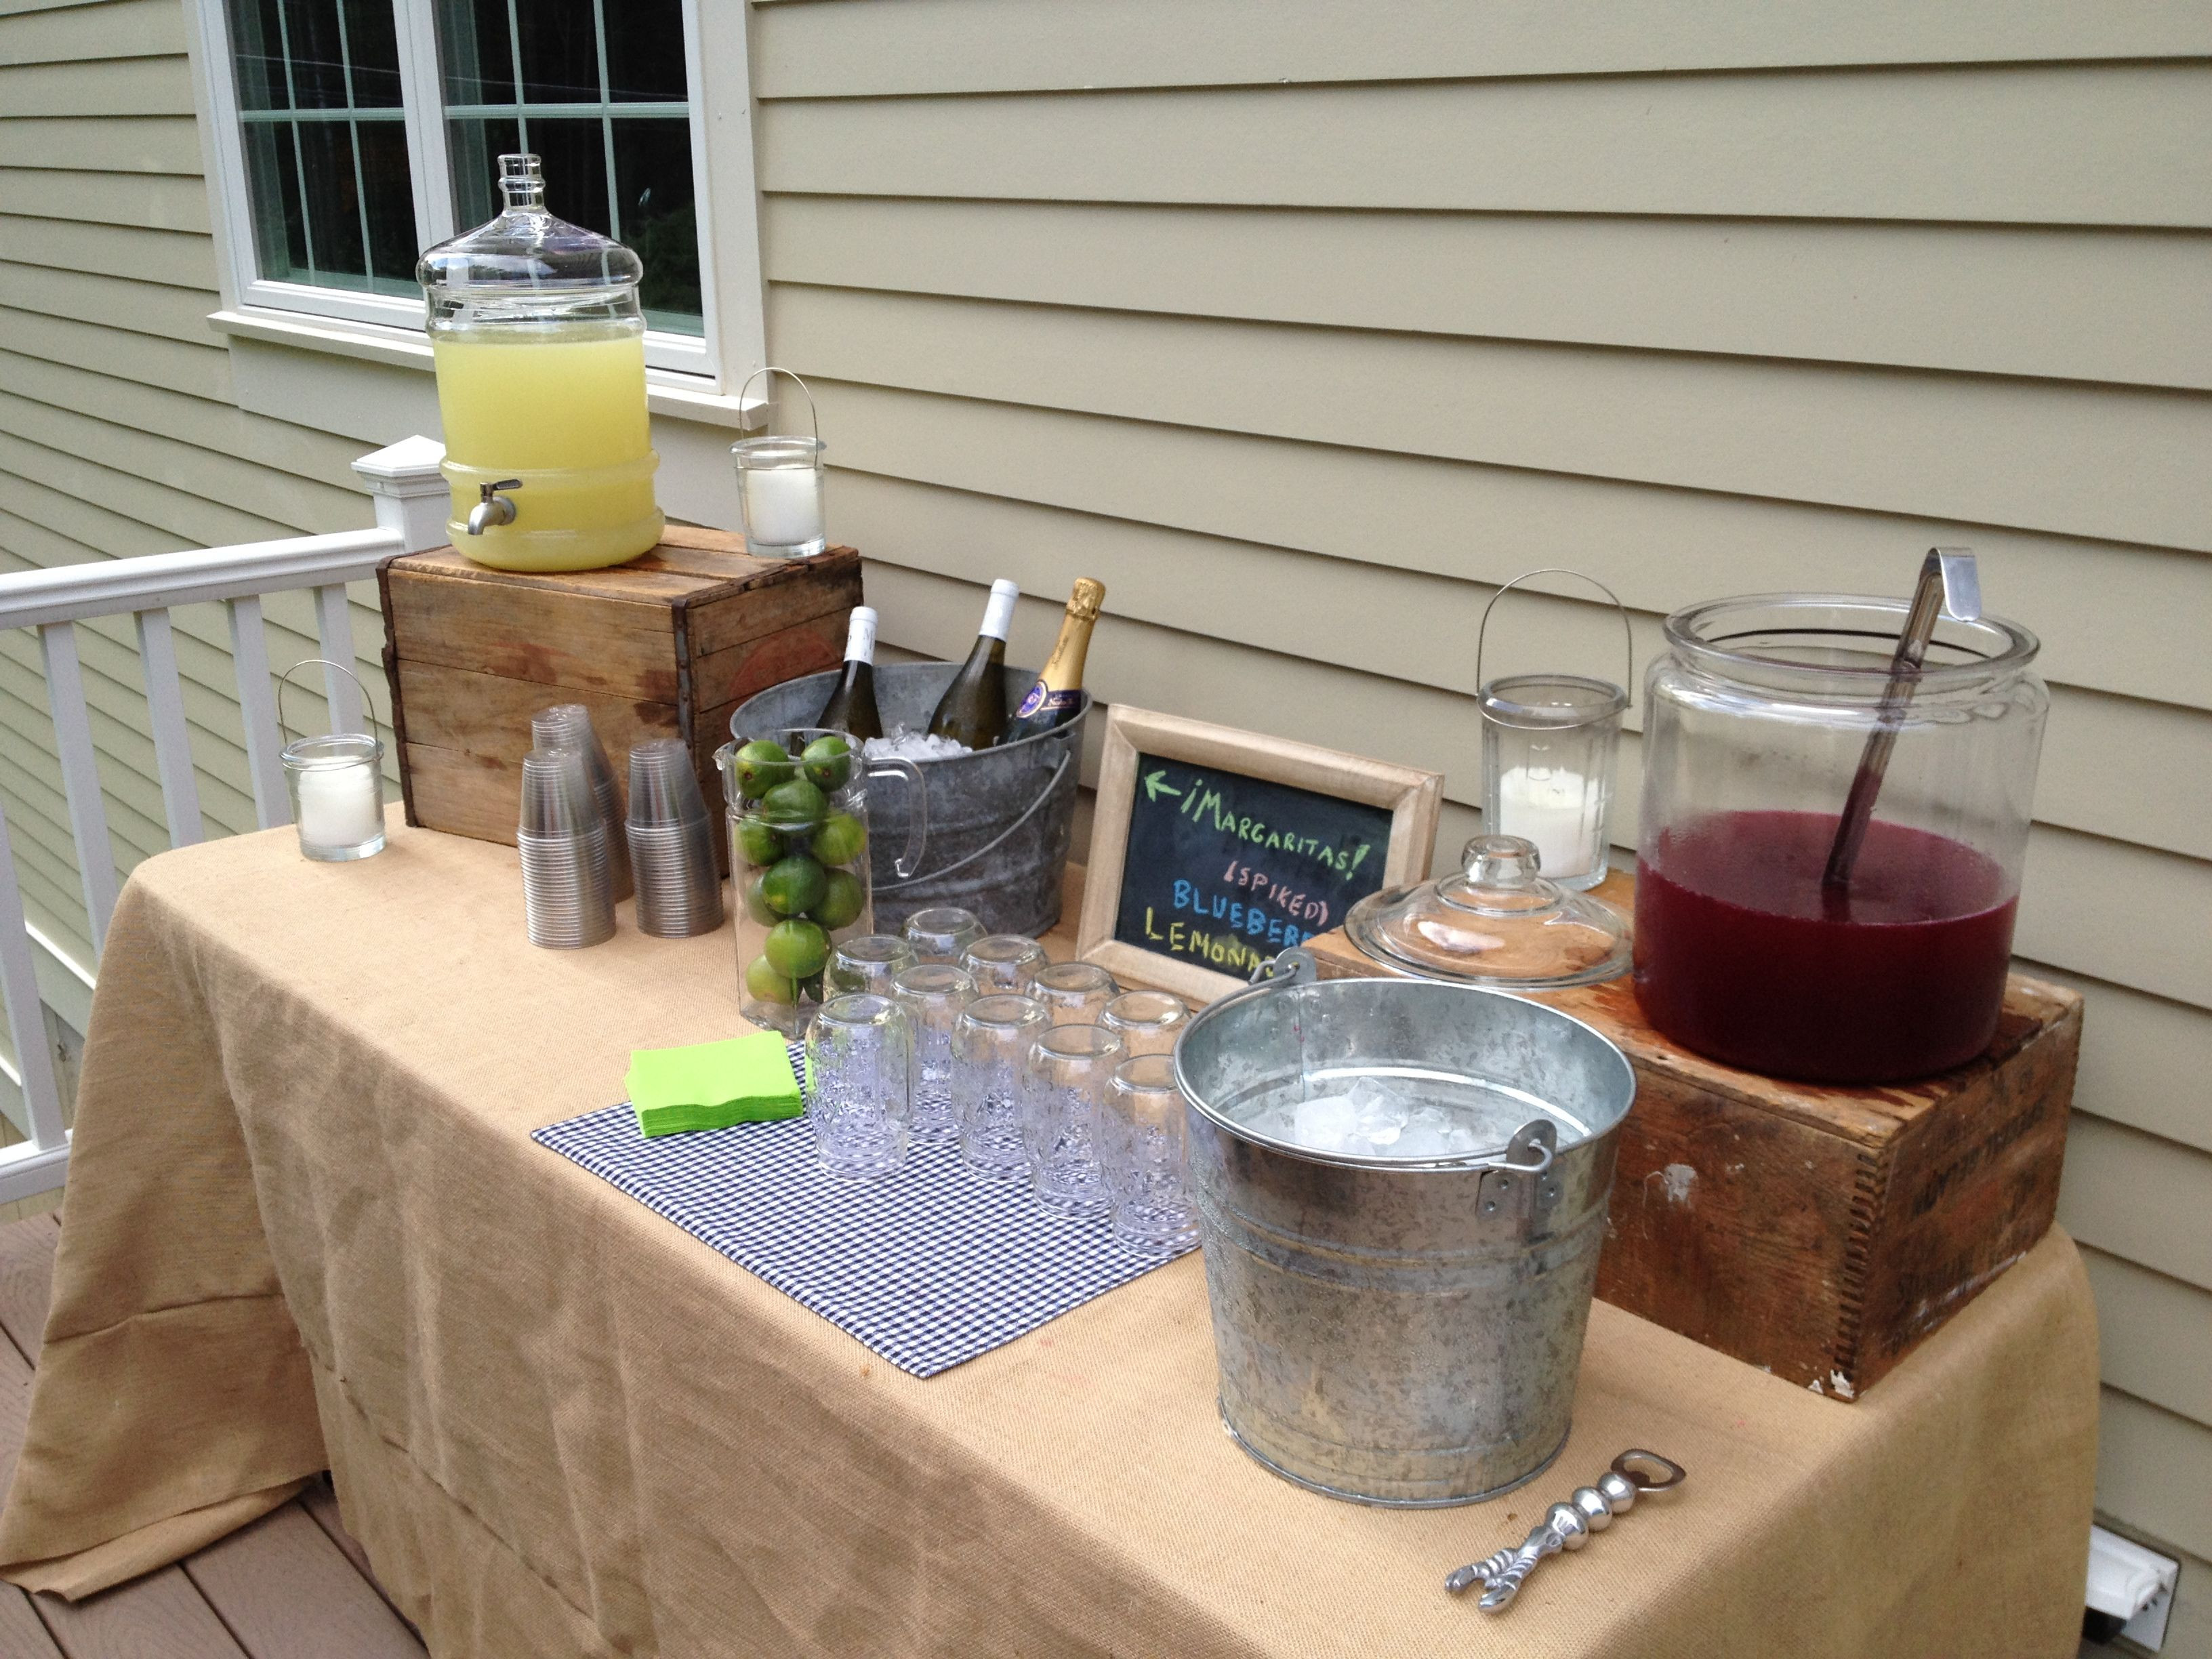 Summer Housewarming Party Ideas
 Outdoor bar at our housewarming party